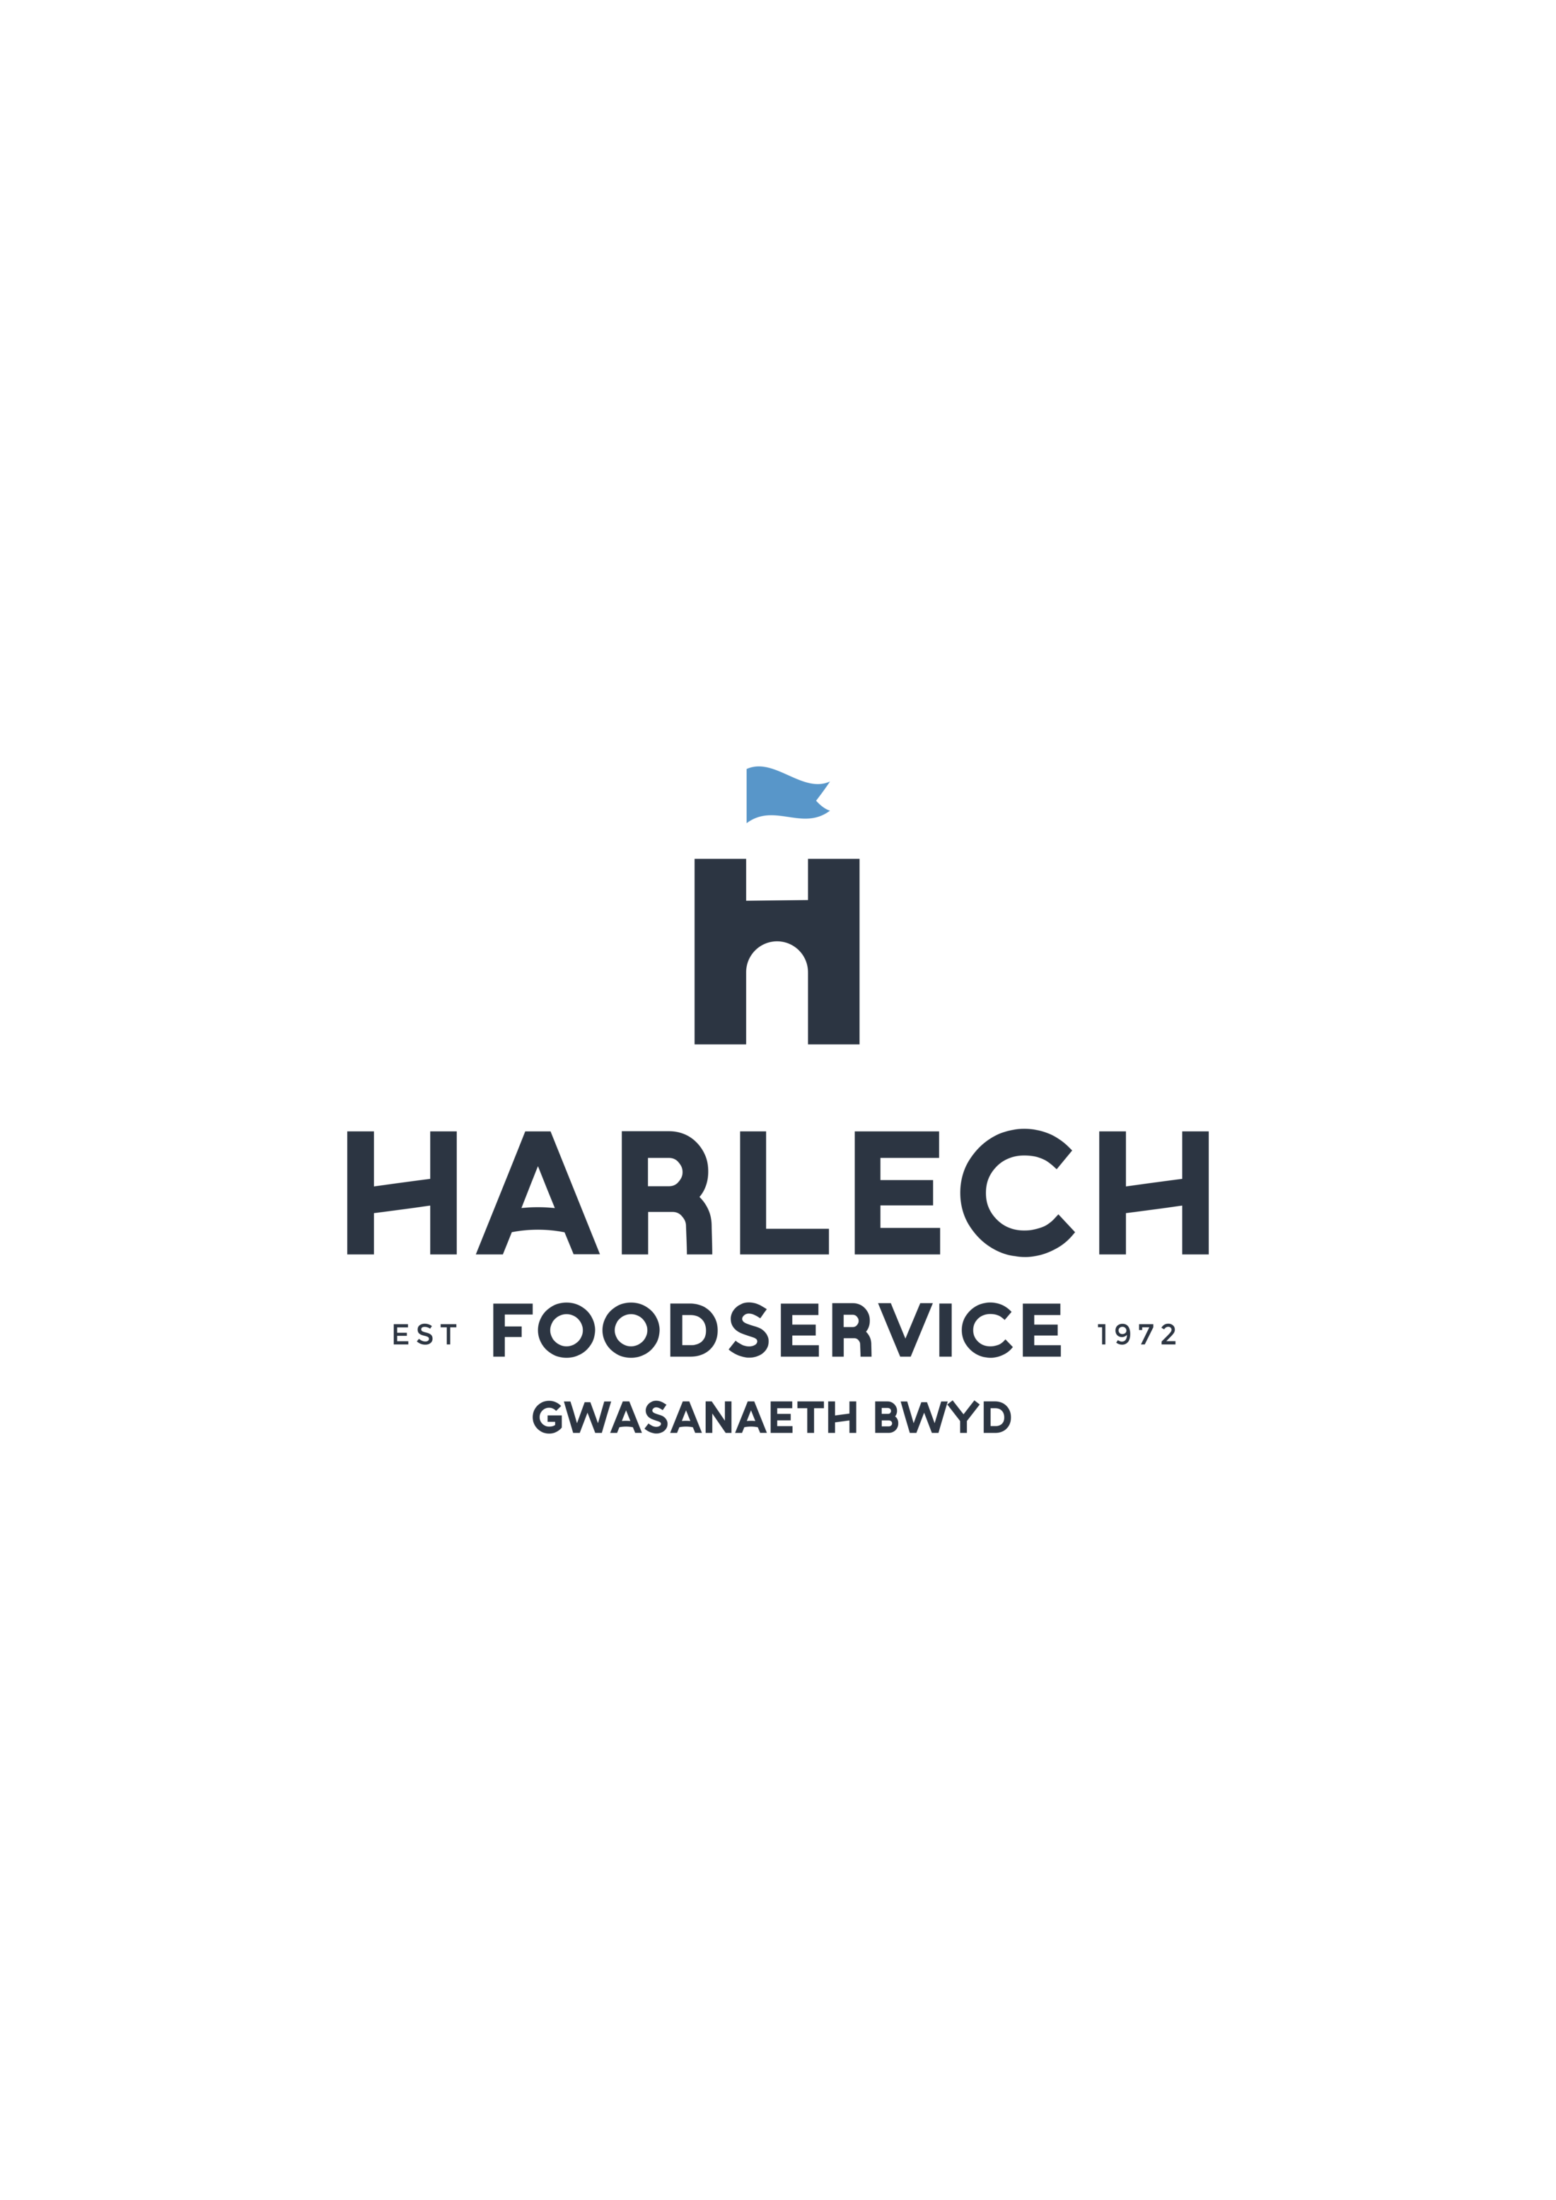 Harlech Foodservice Ltd logo